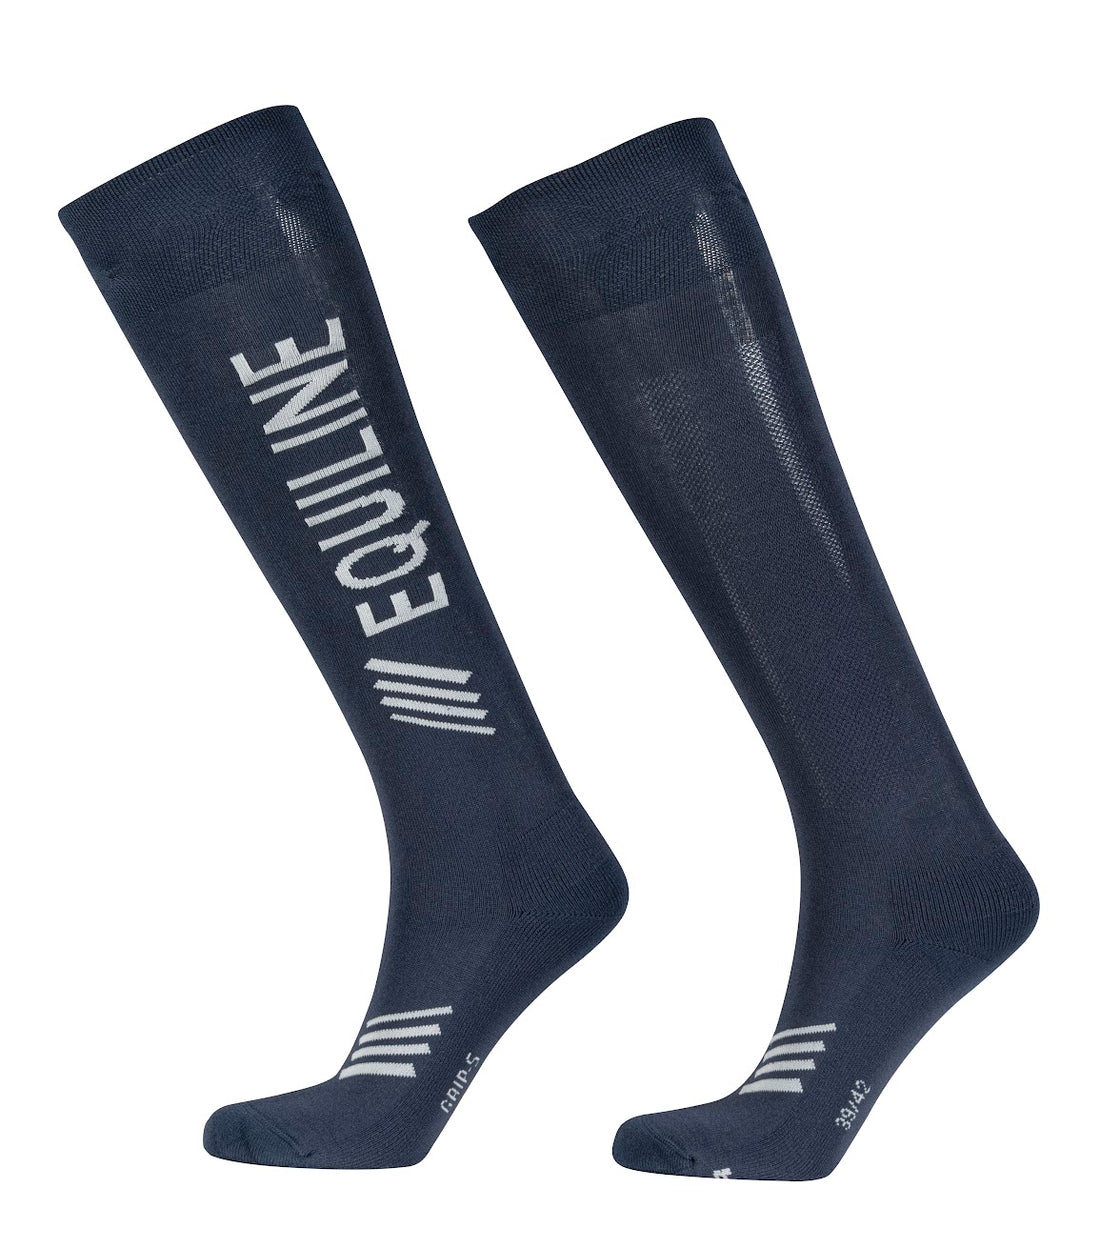 Equiline riding socks